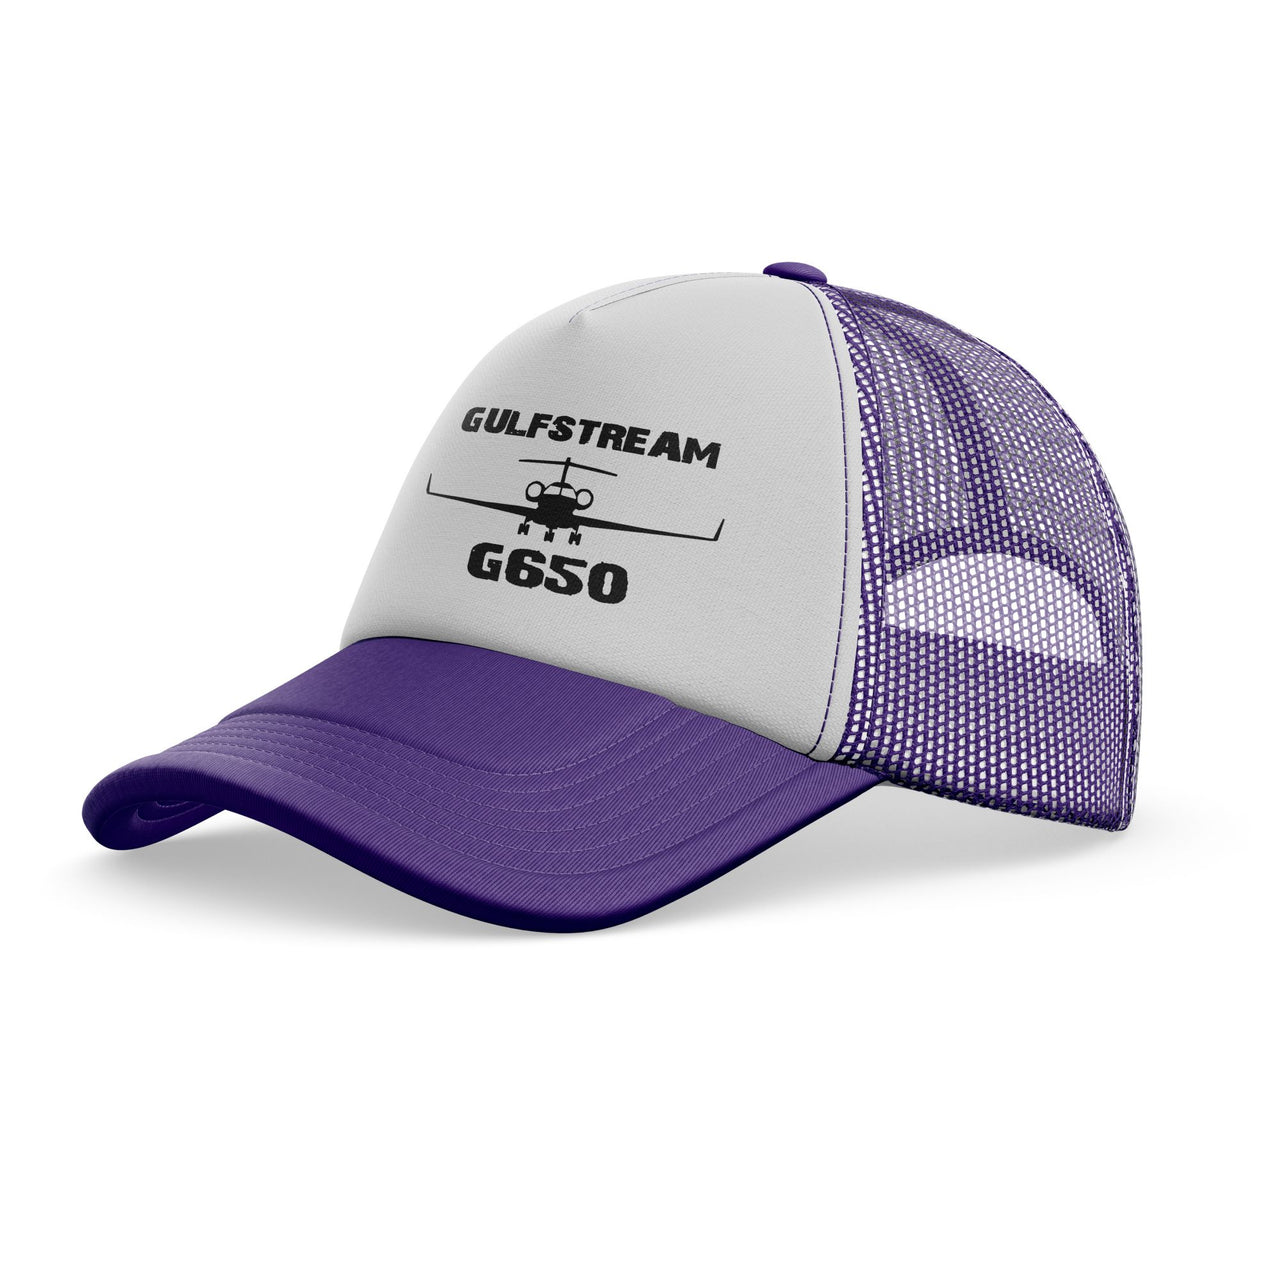 Gulfstream G650 & Plane Designed Trucker Caps & Hats